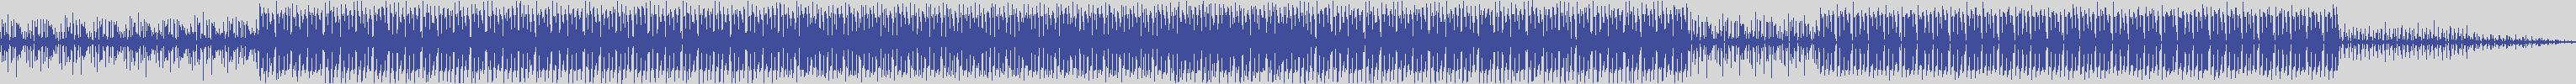 nf_boyz_records [NFY015] Tribal Gang - Corona and Lime [Rhythms Mix] audio wave form